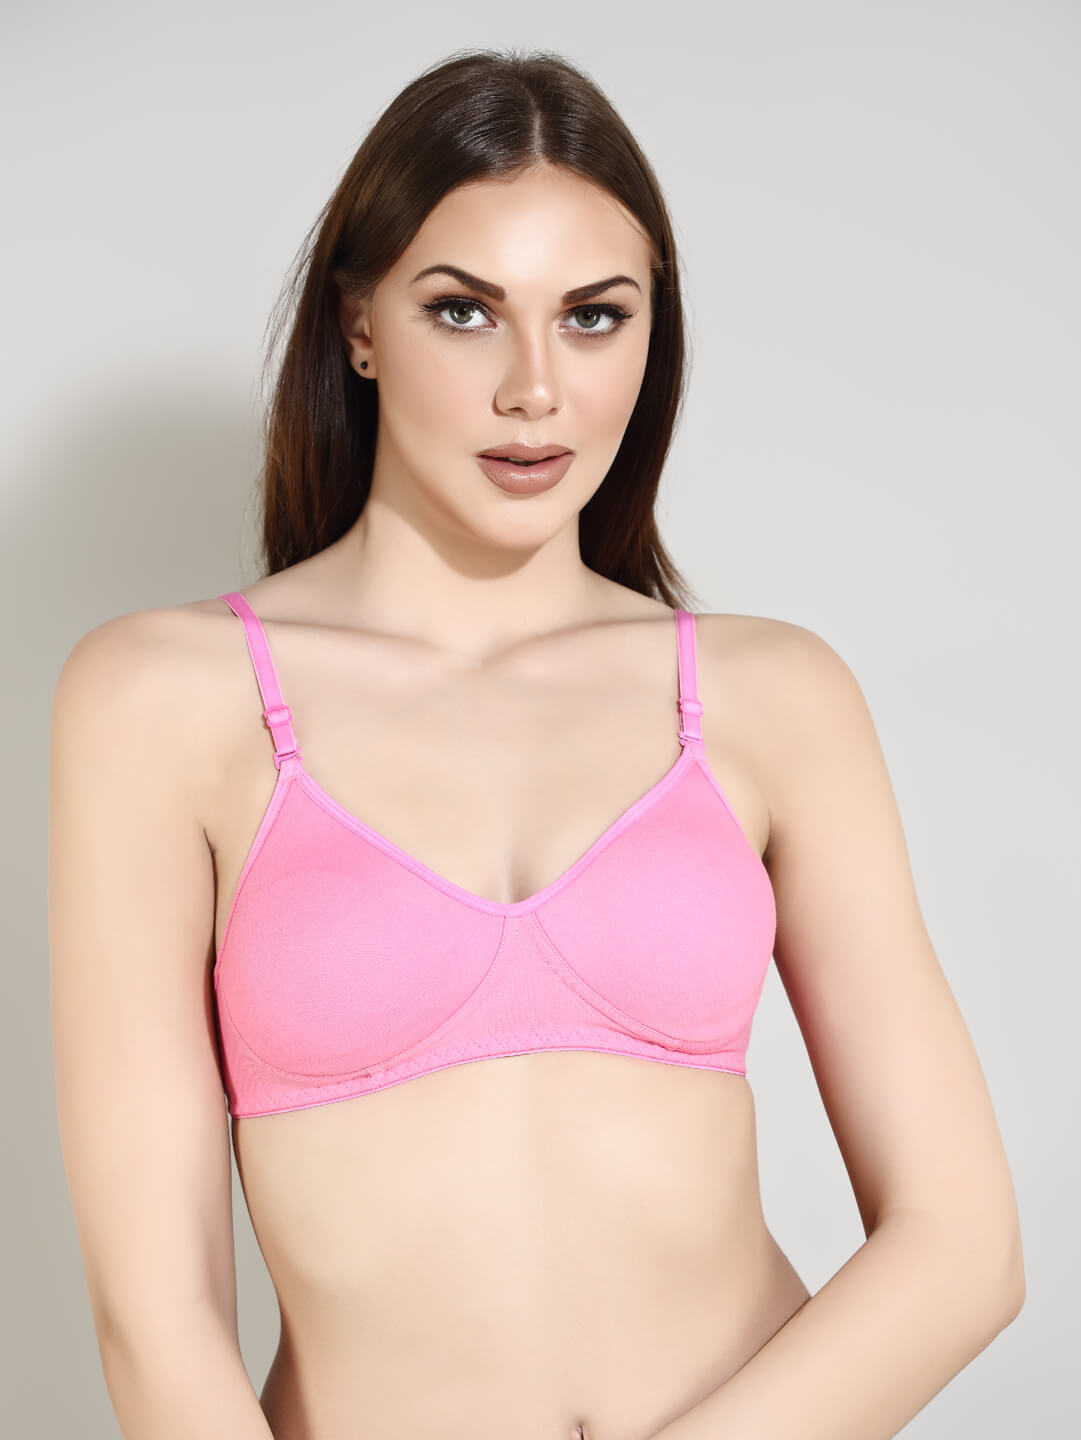 Juliyet rose net bra imported bra stylish bra comfortable bra single